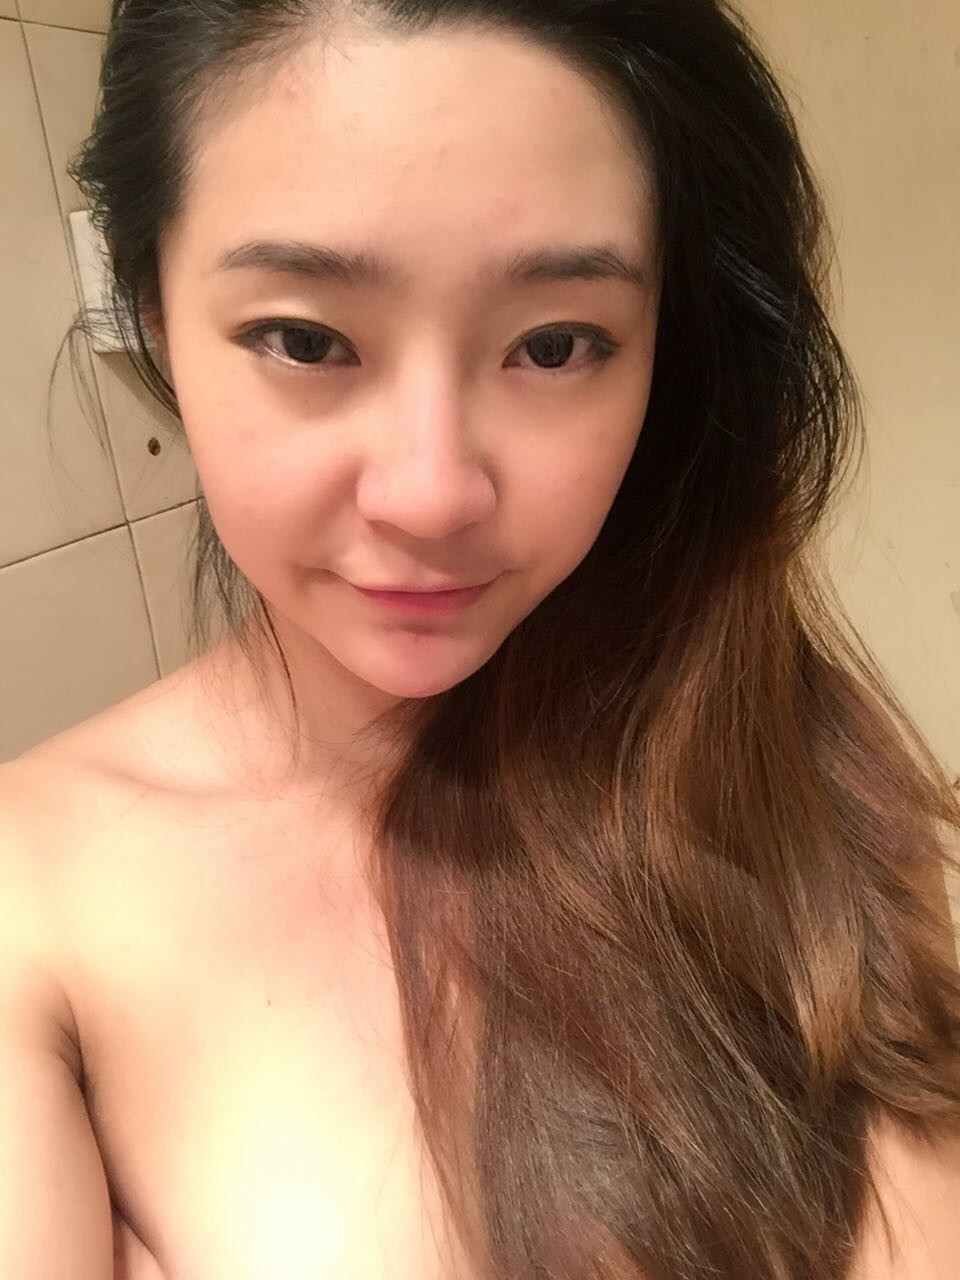 China Girl Private Photos Selfies